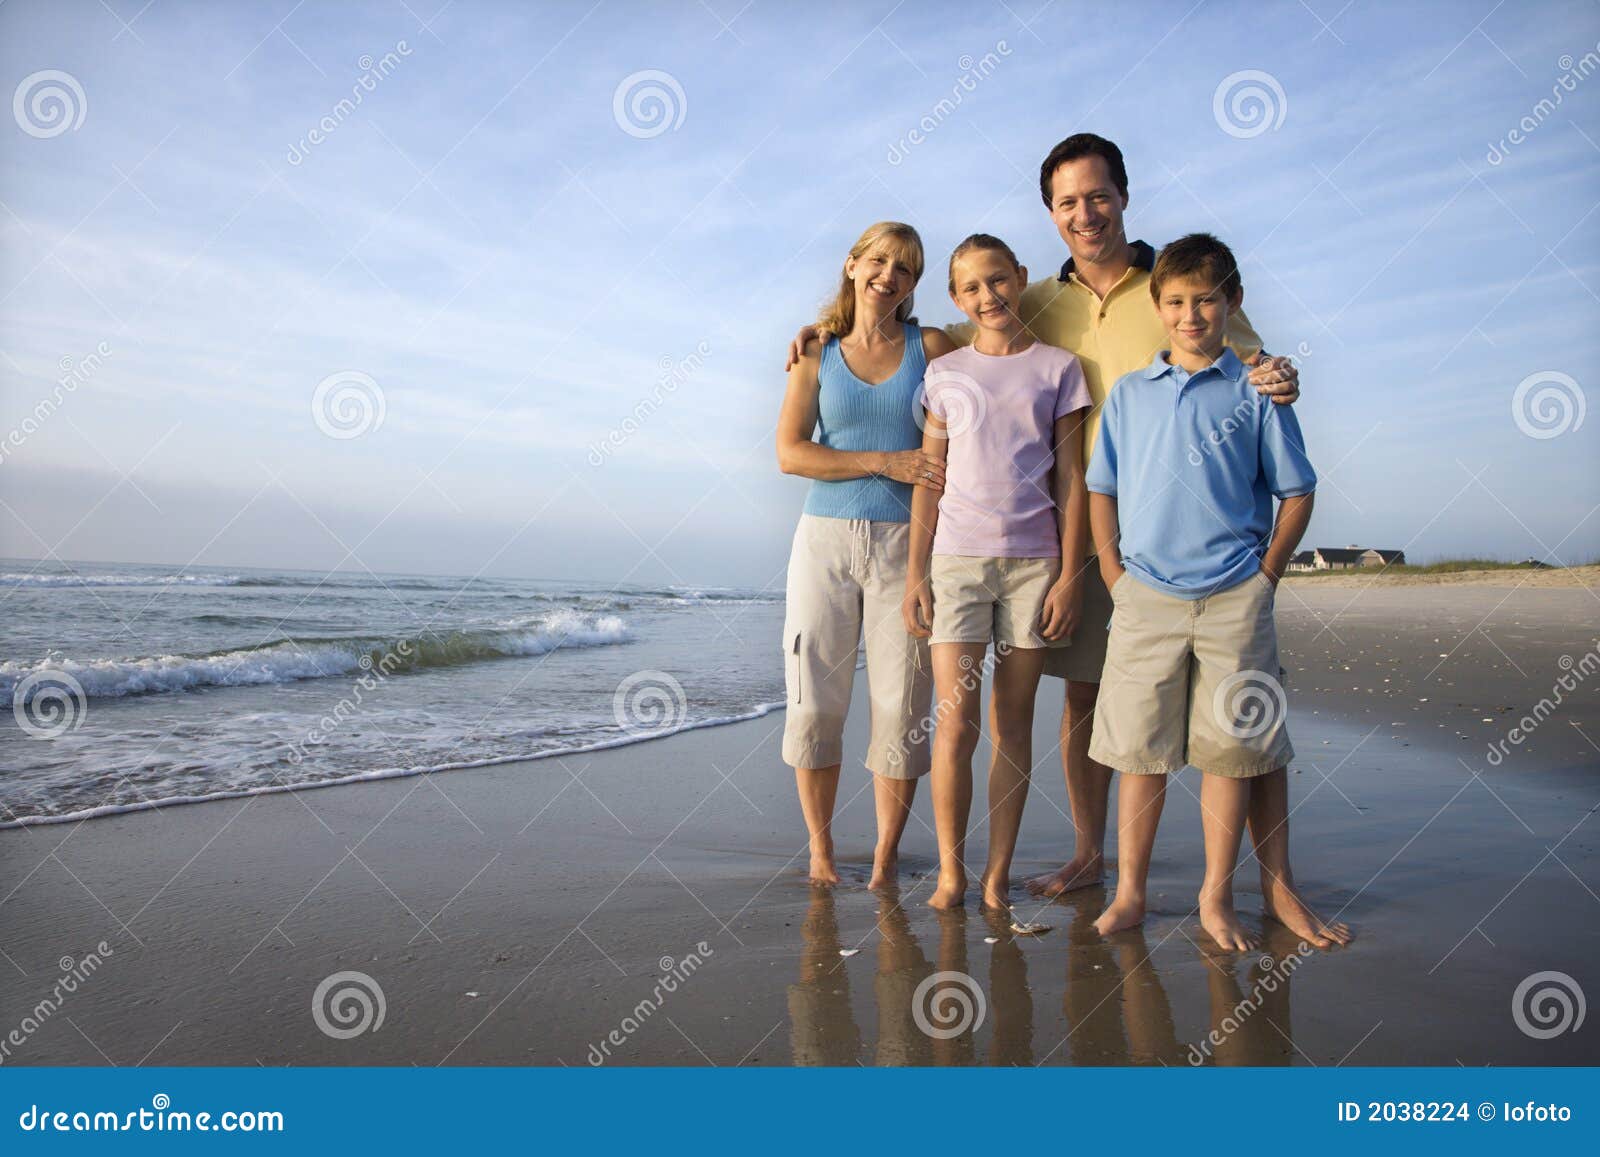 On beach family 26 Best